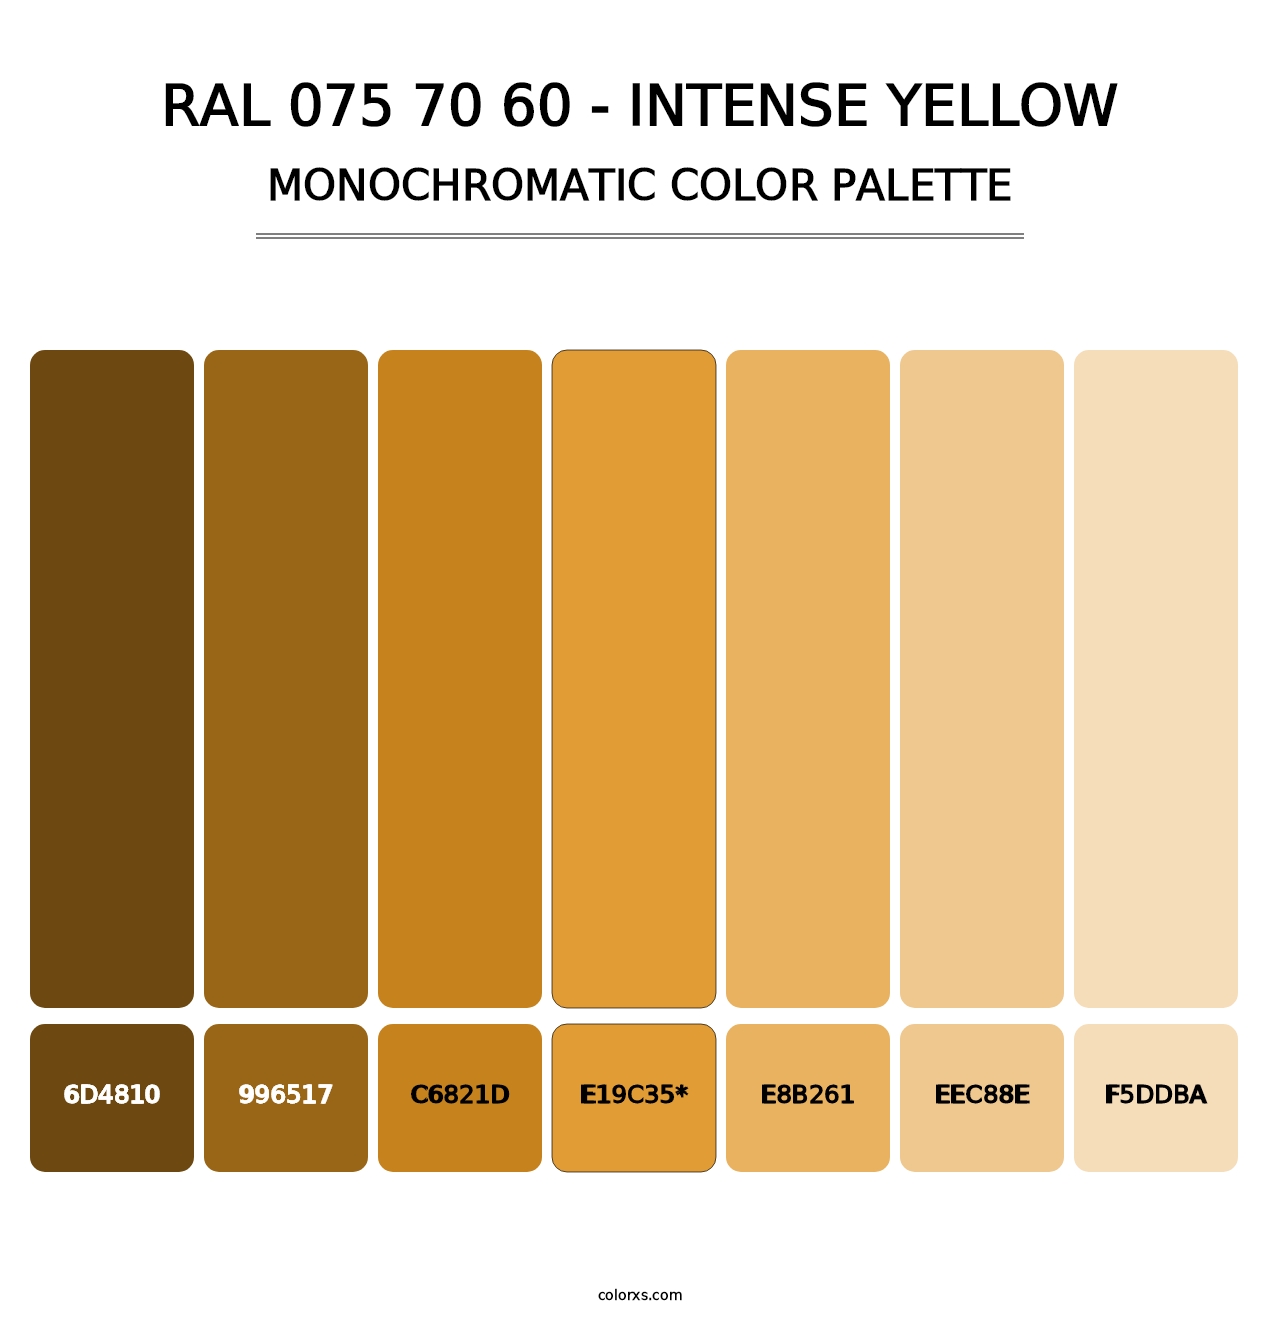 RAL 075 70 60 - Intense Yellow - Monochromatic Color Palette